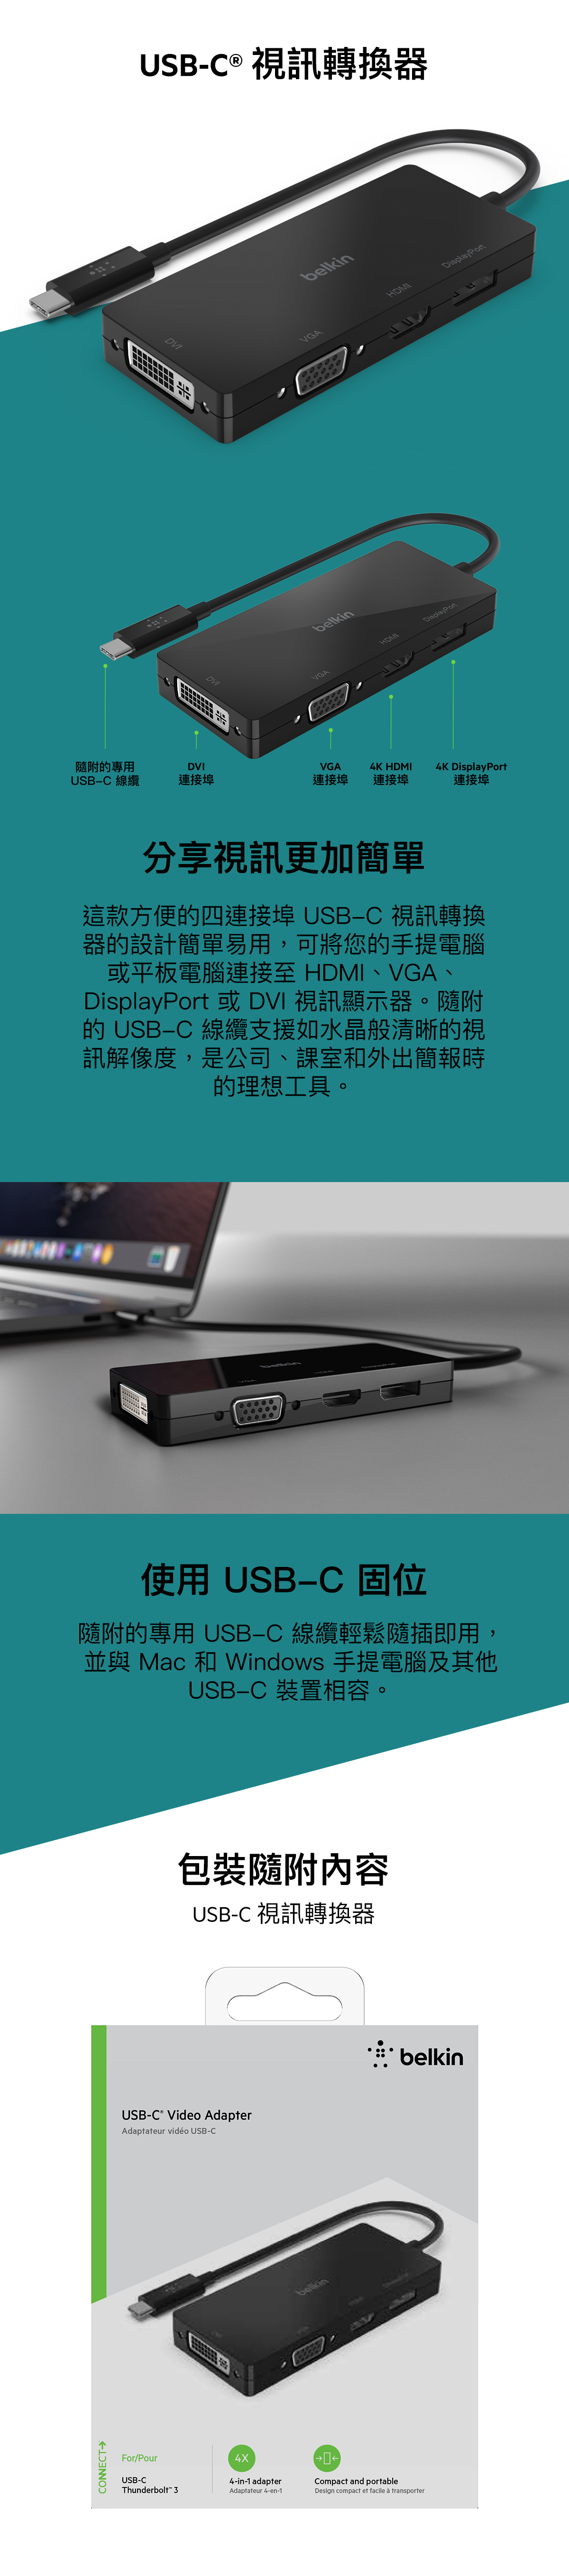 USB-C 視訊轉換器